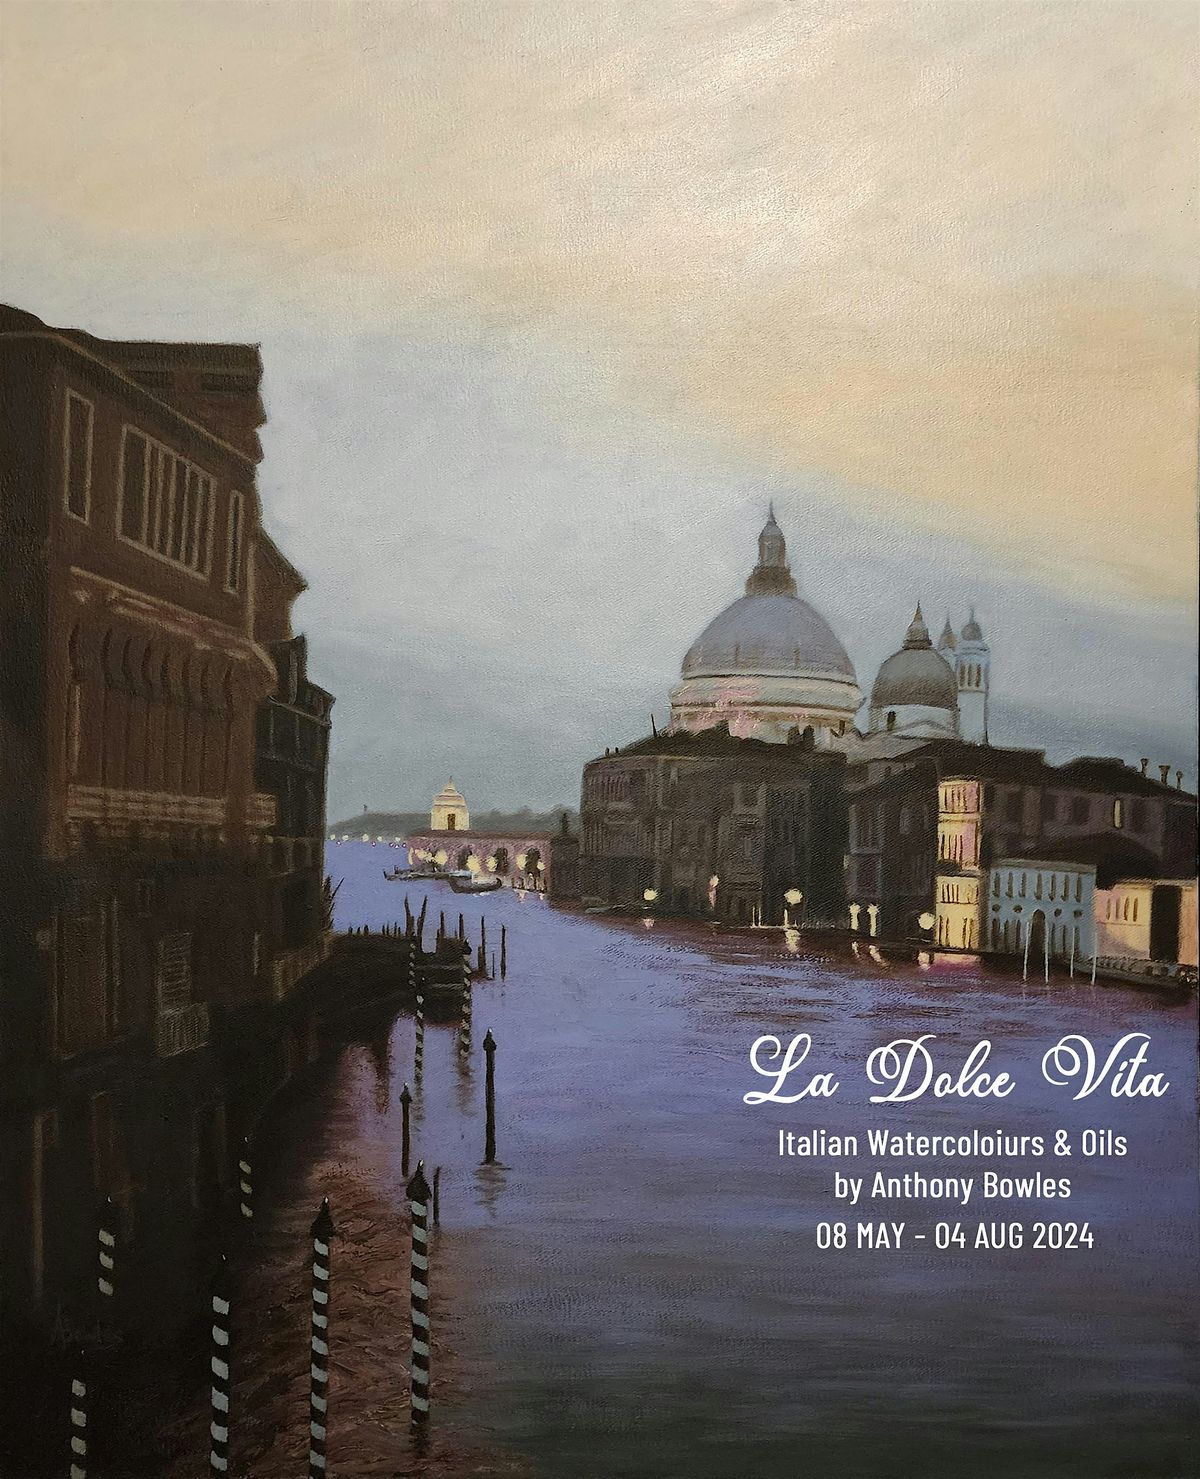 LAUNCH PARTY: Anthony Bowles "La Dolce Vita" Exhibition